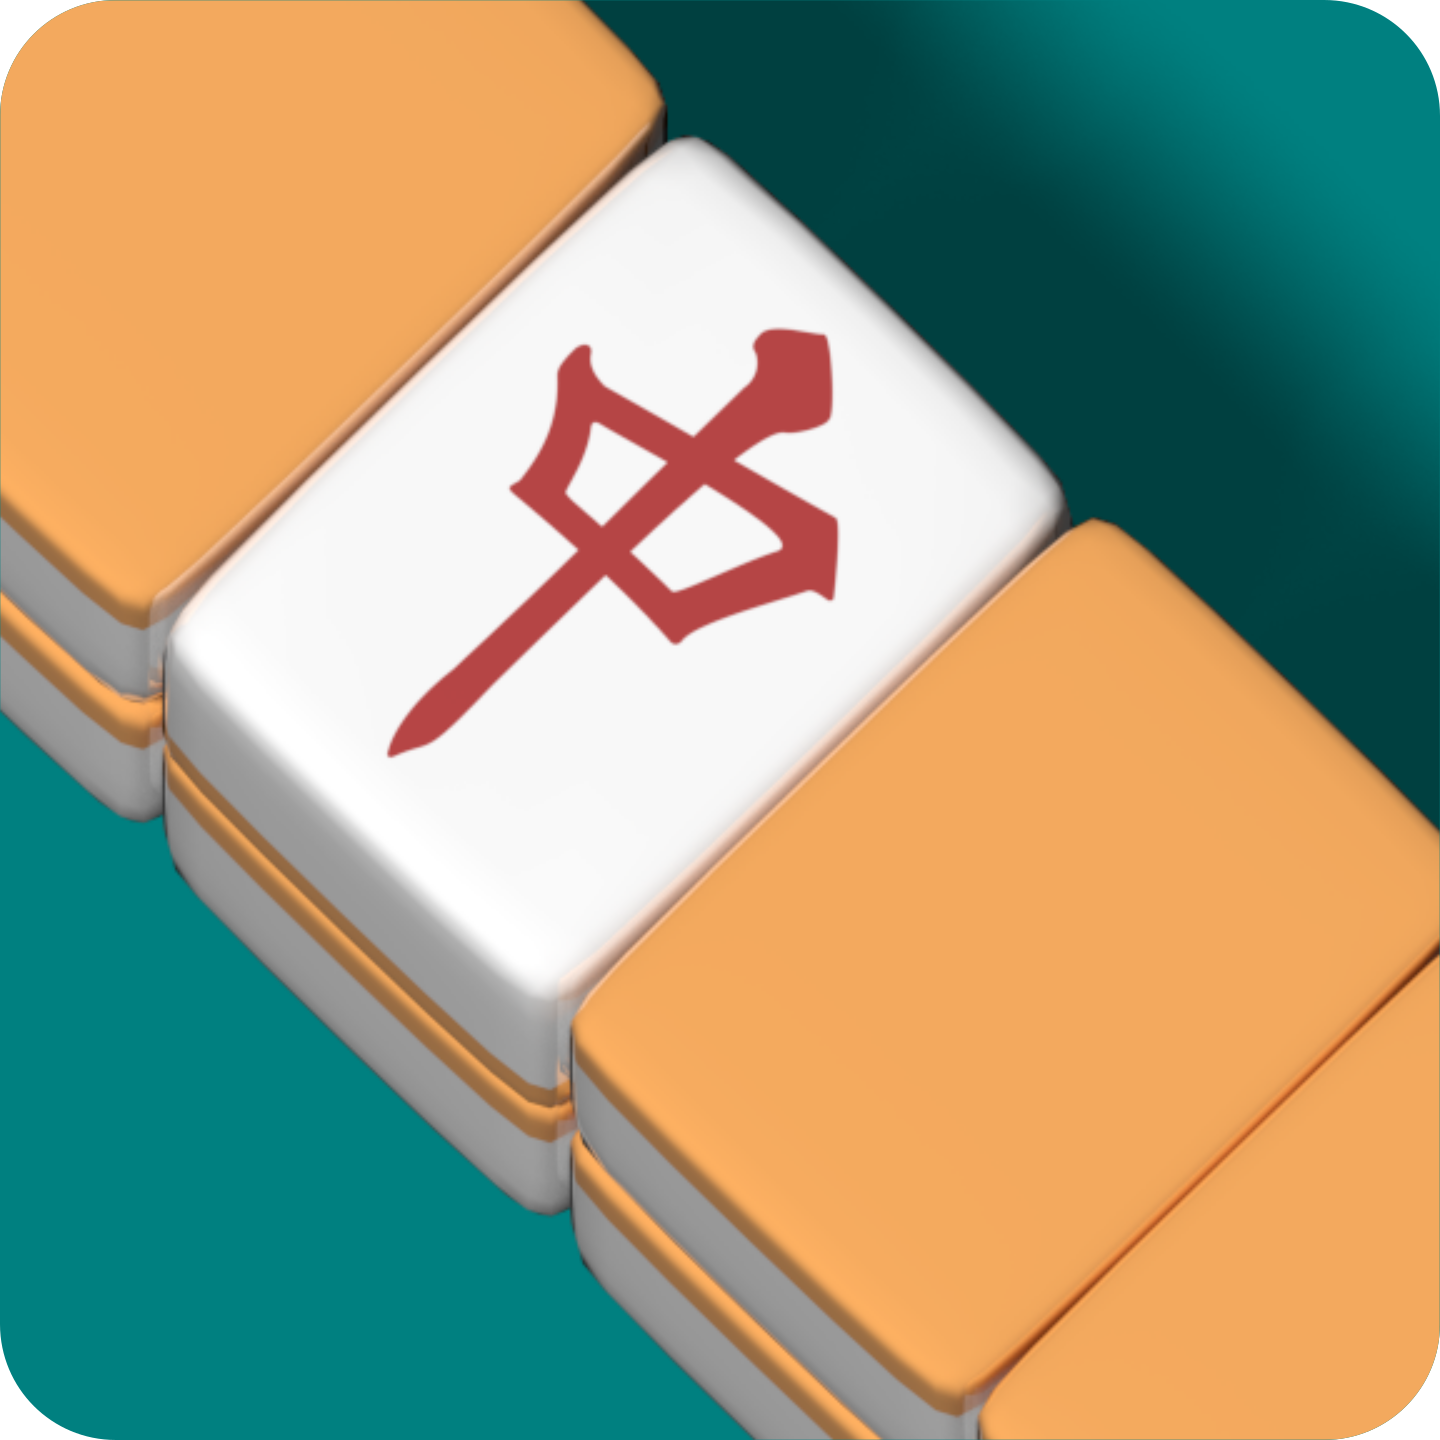 San Hako Riichi (Two Player Mahjong) rules updated : r/Mahjong